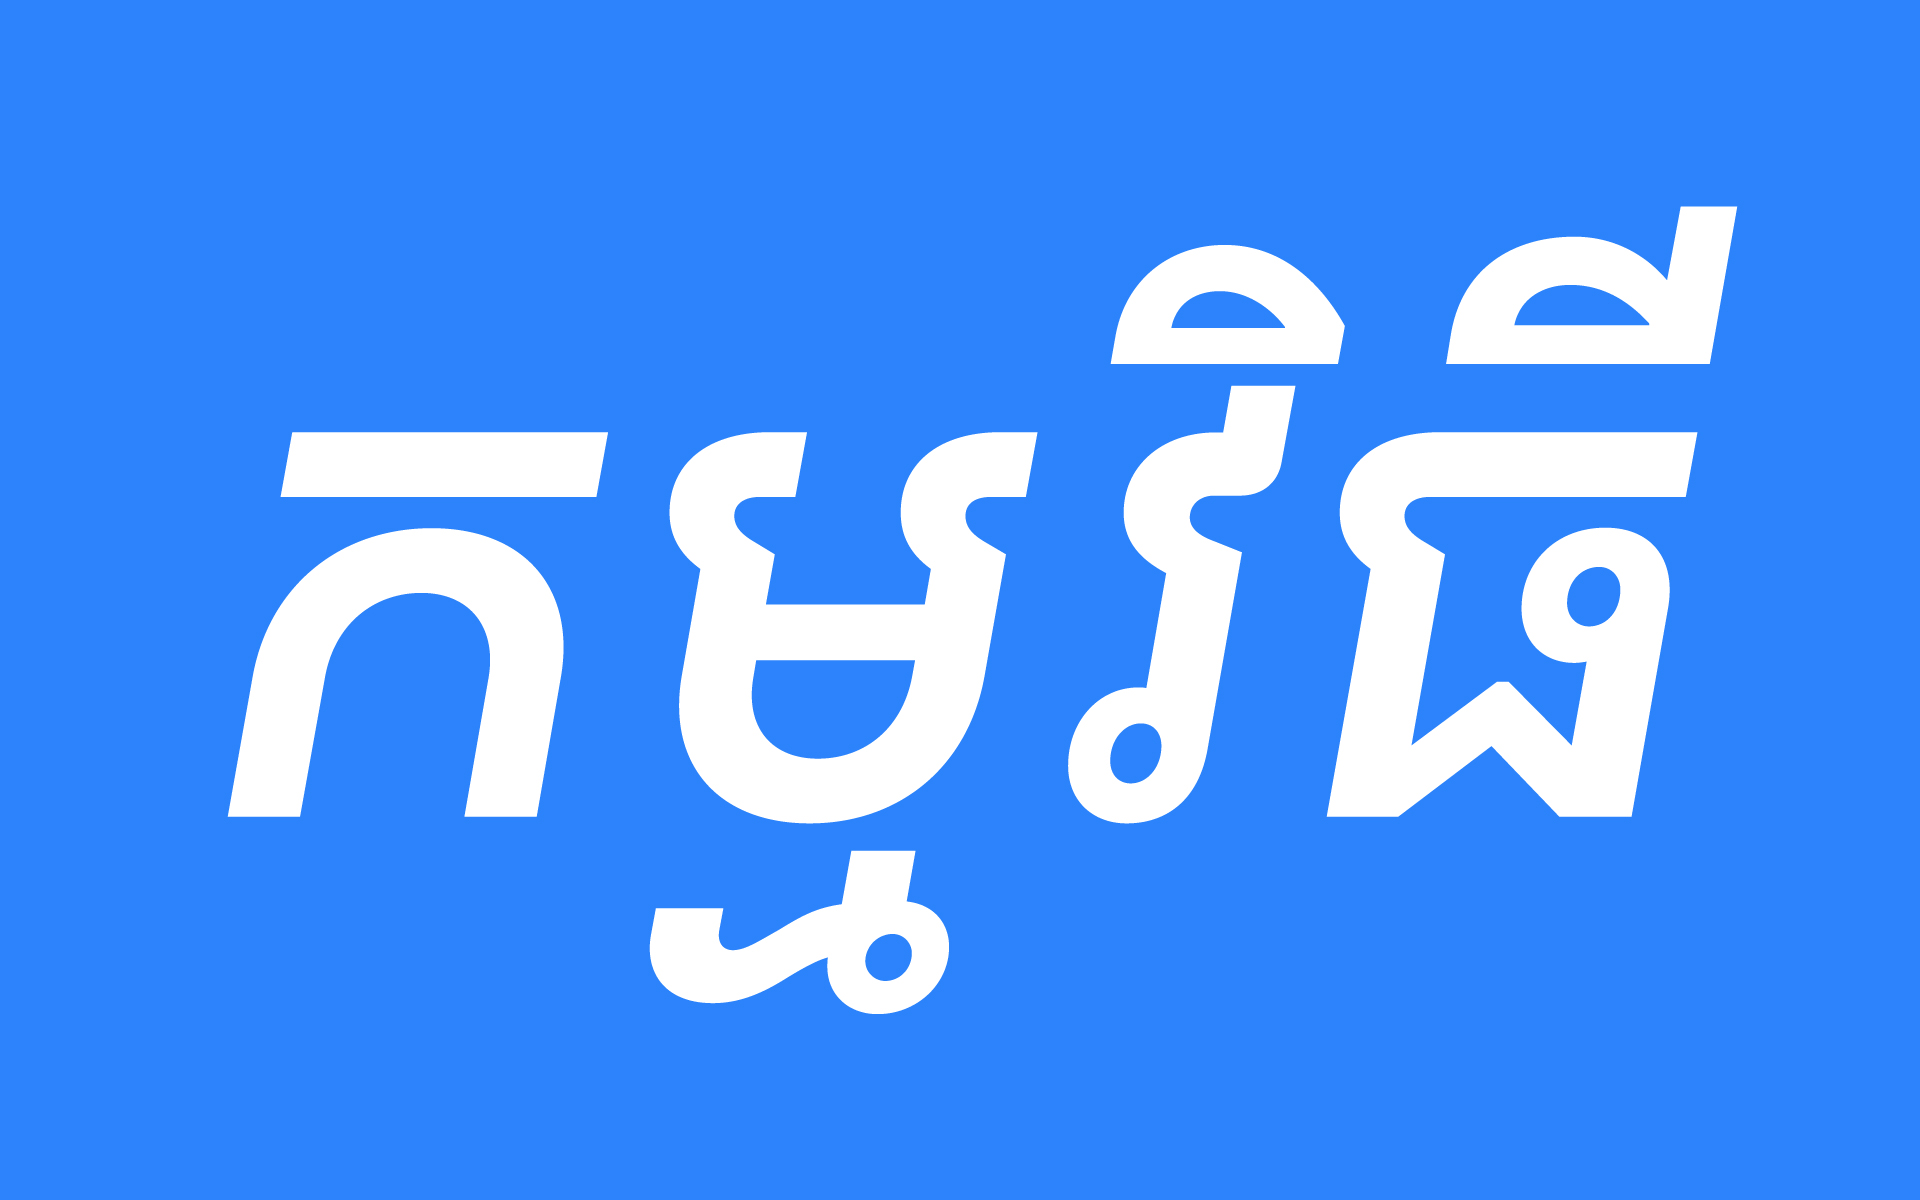 Google-Sans-Khmer-Typeface-Design-9